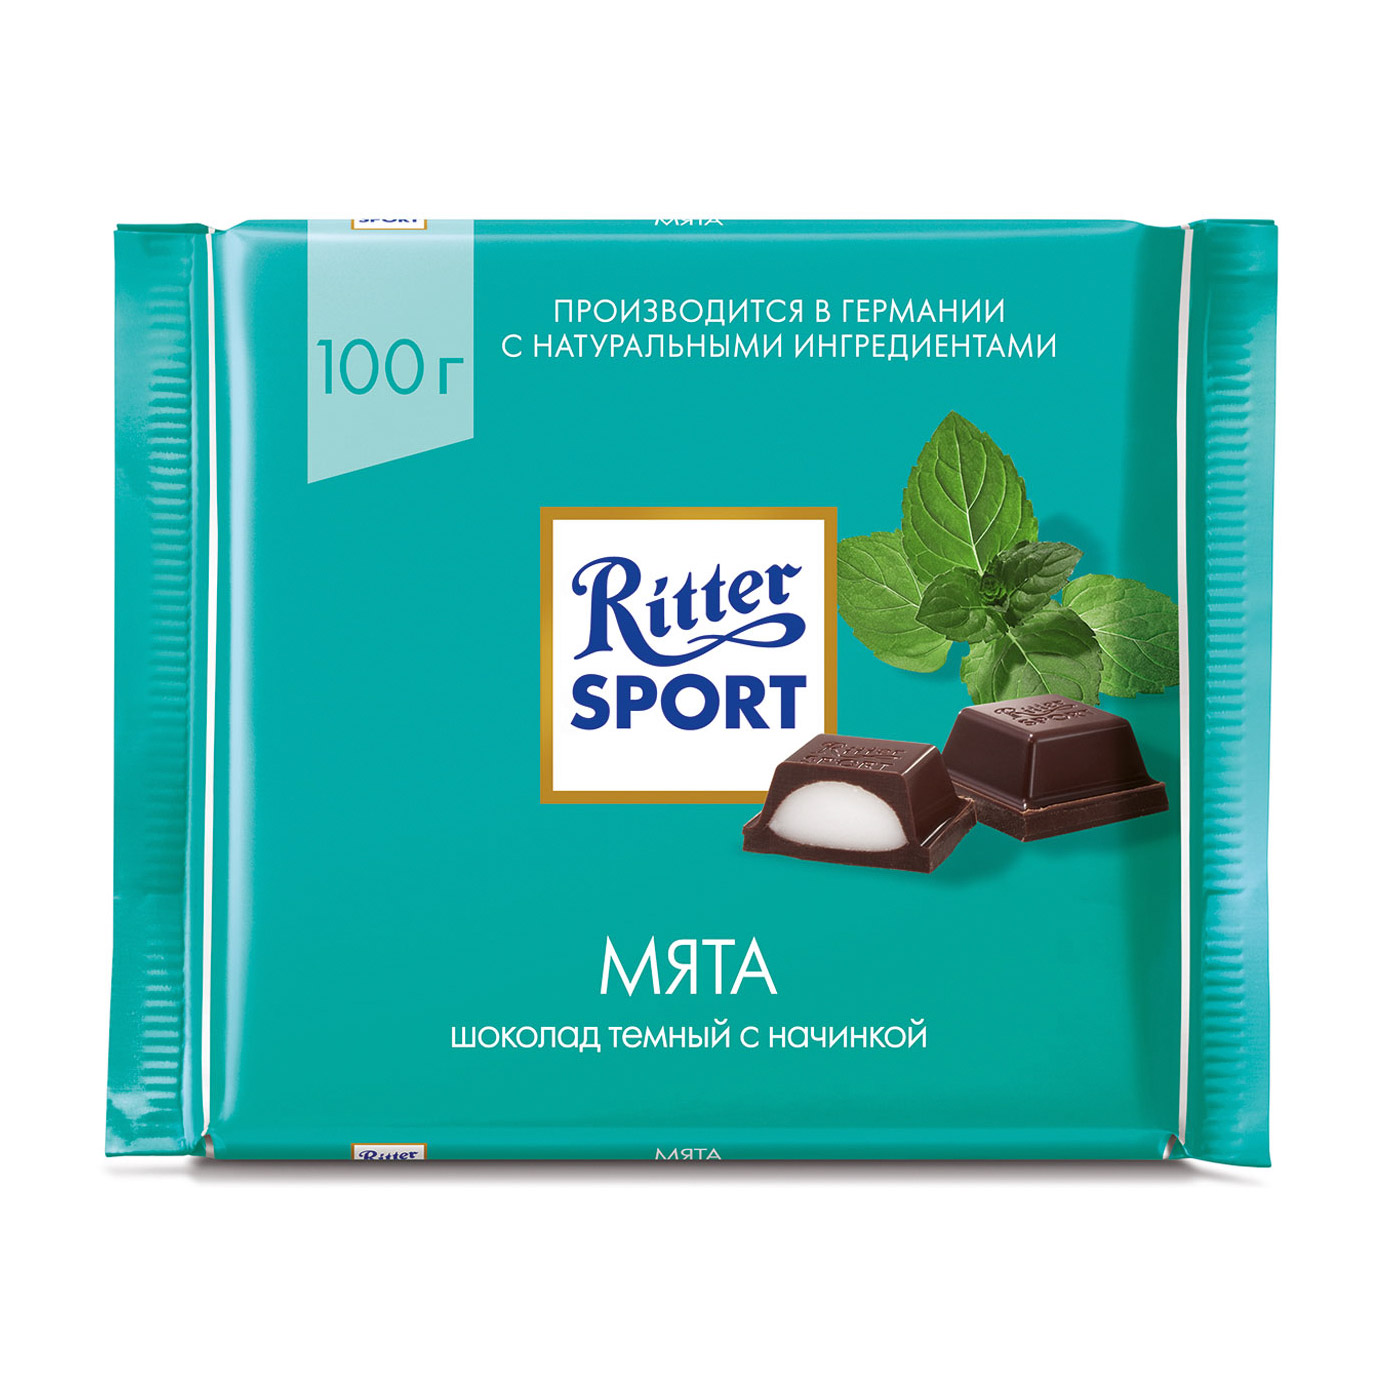 шоколад тёмный ritter sport extra cocoa из перу 74 % какао 100 г Шоколад тёмный Ritter Sport Мята 100 г